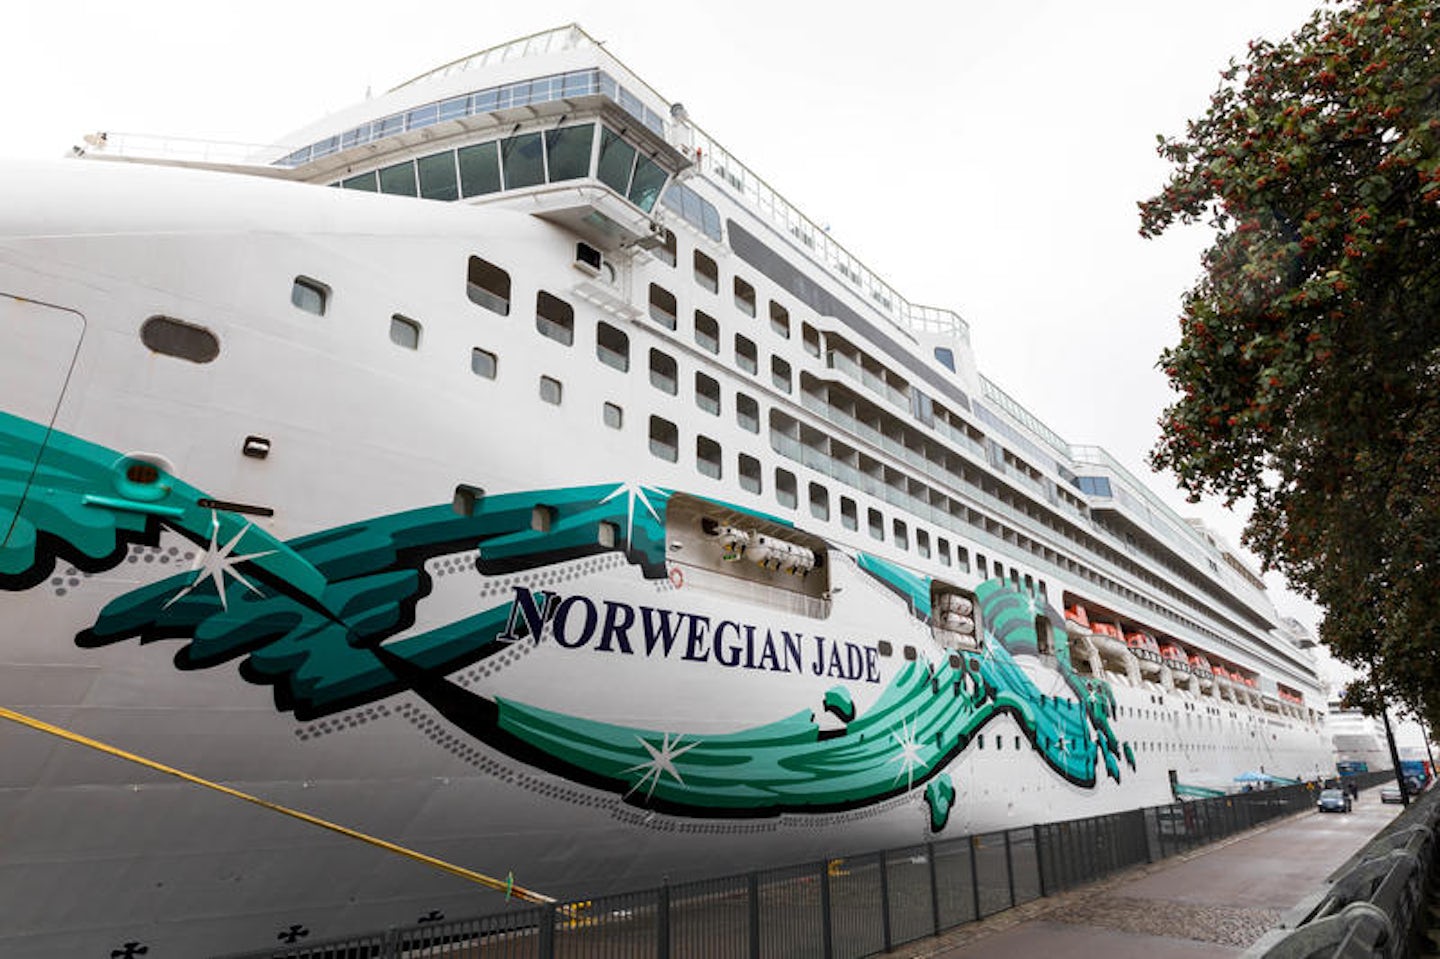 norwegian jade cruise ship current location